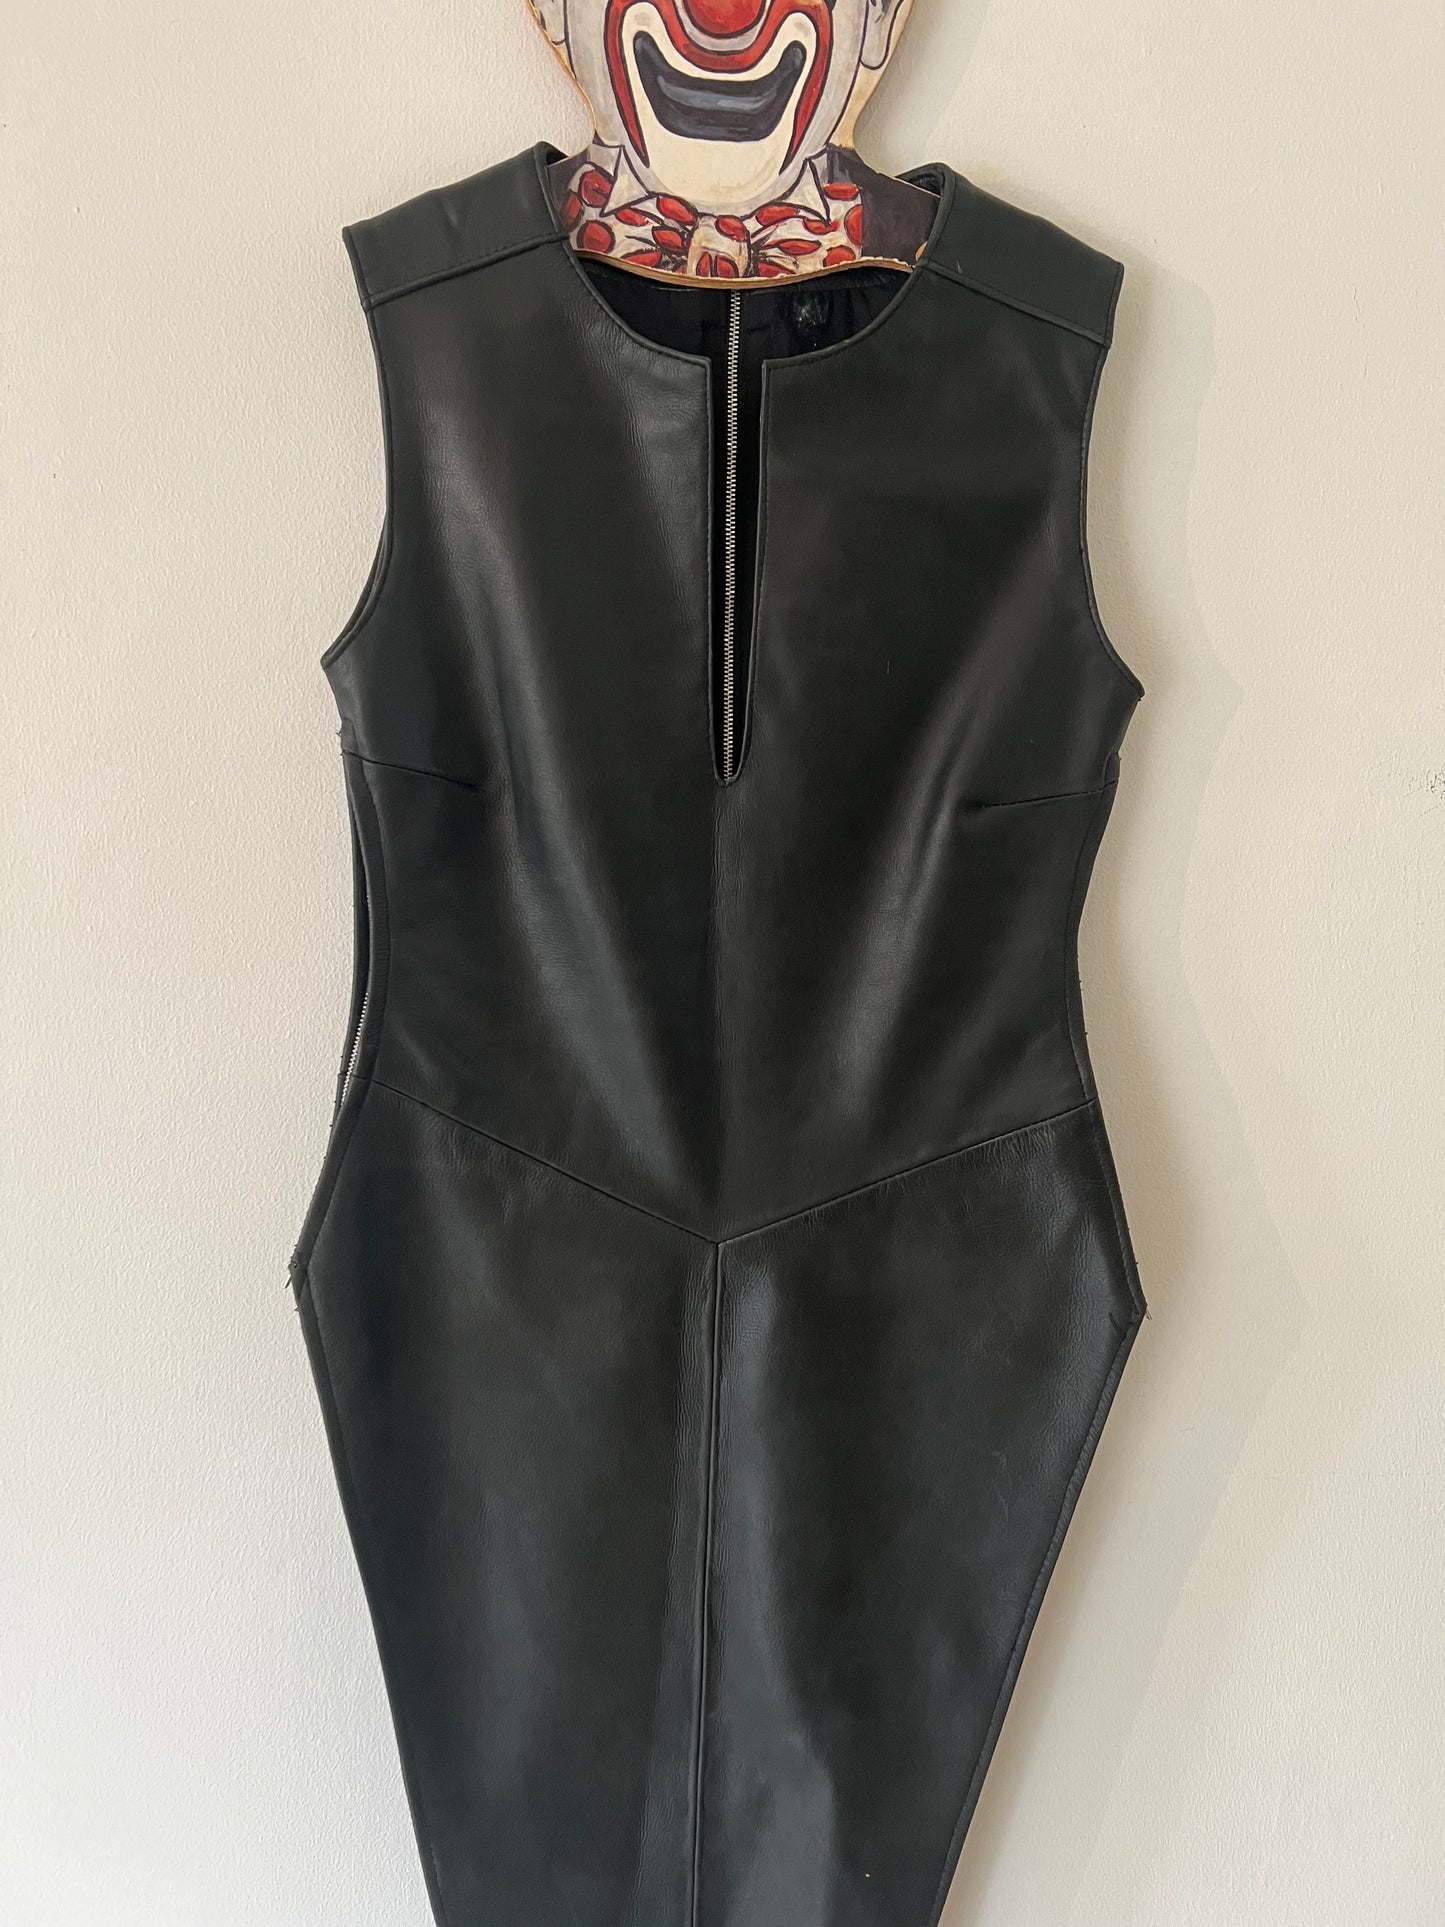 Vintage Black Leather Asymmetrical Bodice